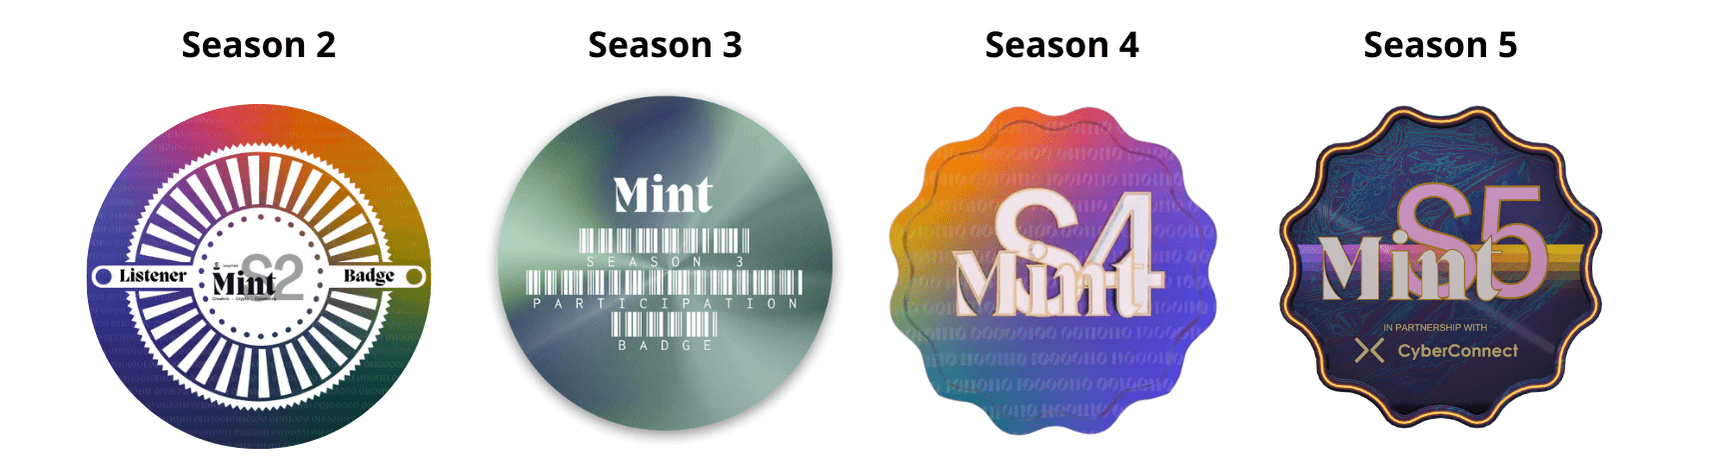 The history of Mint Season Pins